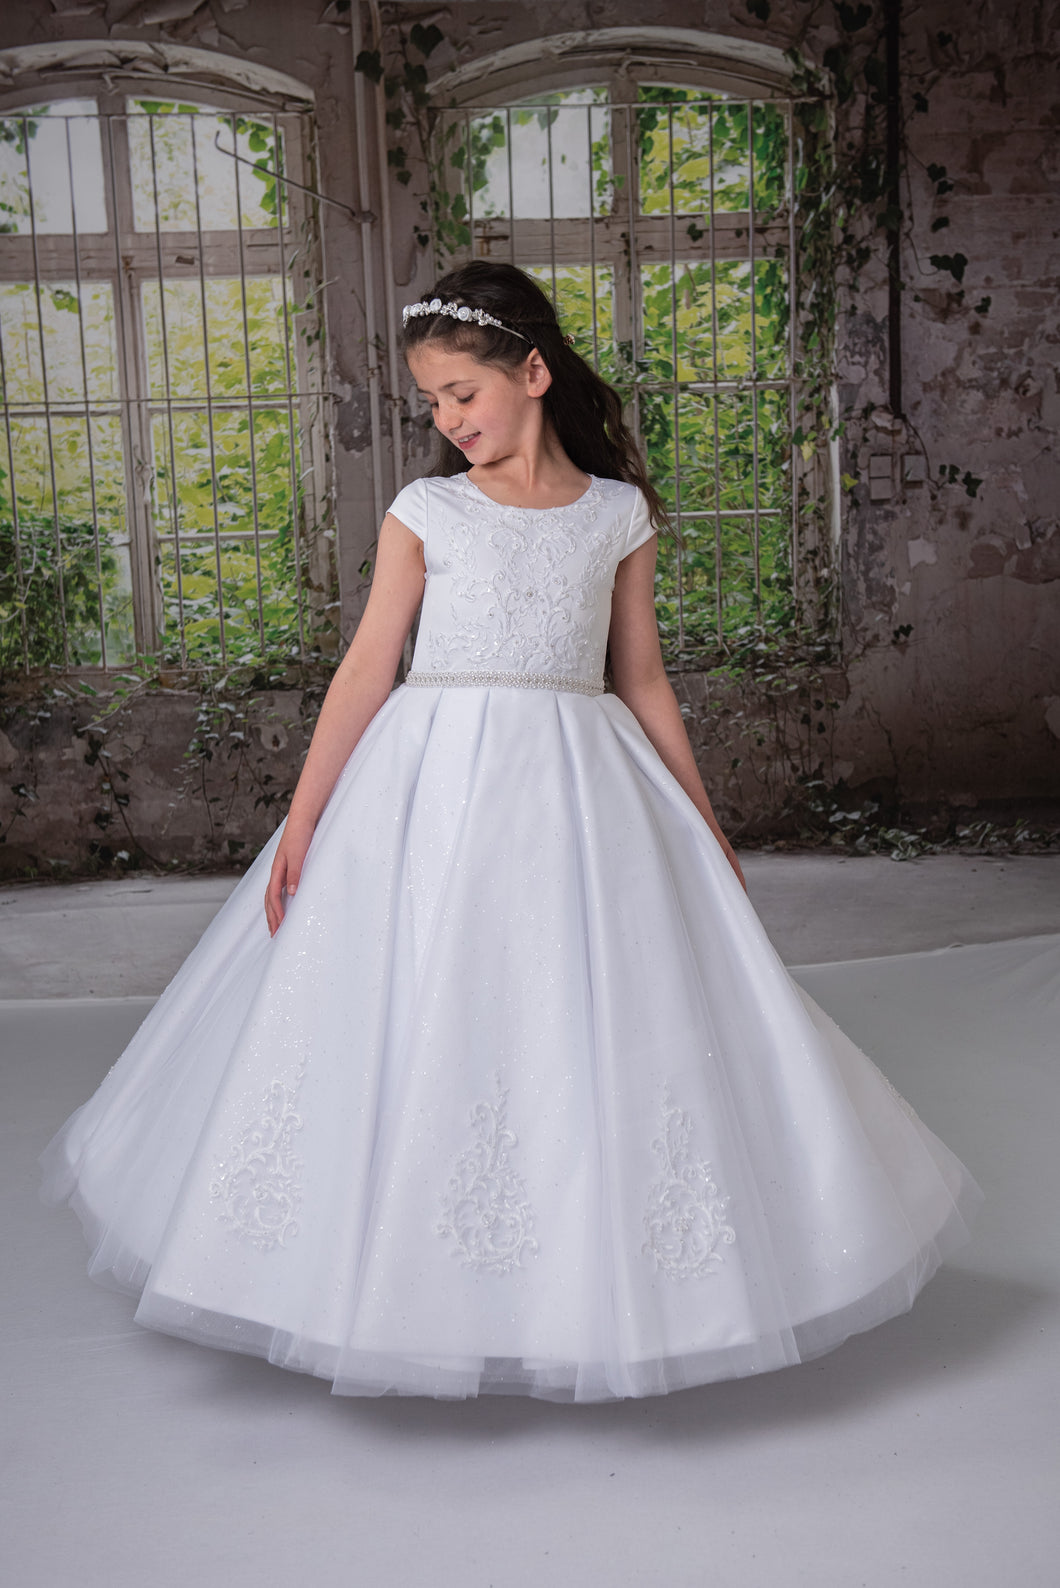 SALE COMMUNION DRESS Sweetie Pie Girls White Communion Dress:- 4065  AGE 6